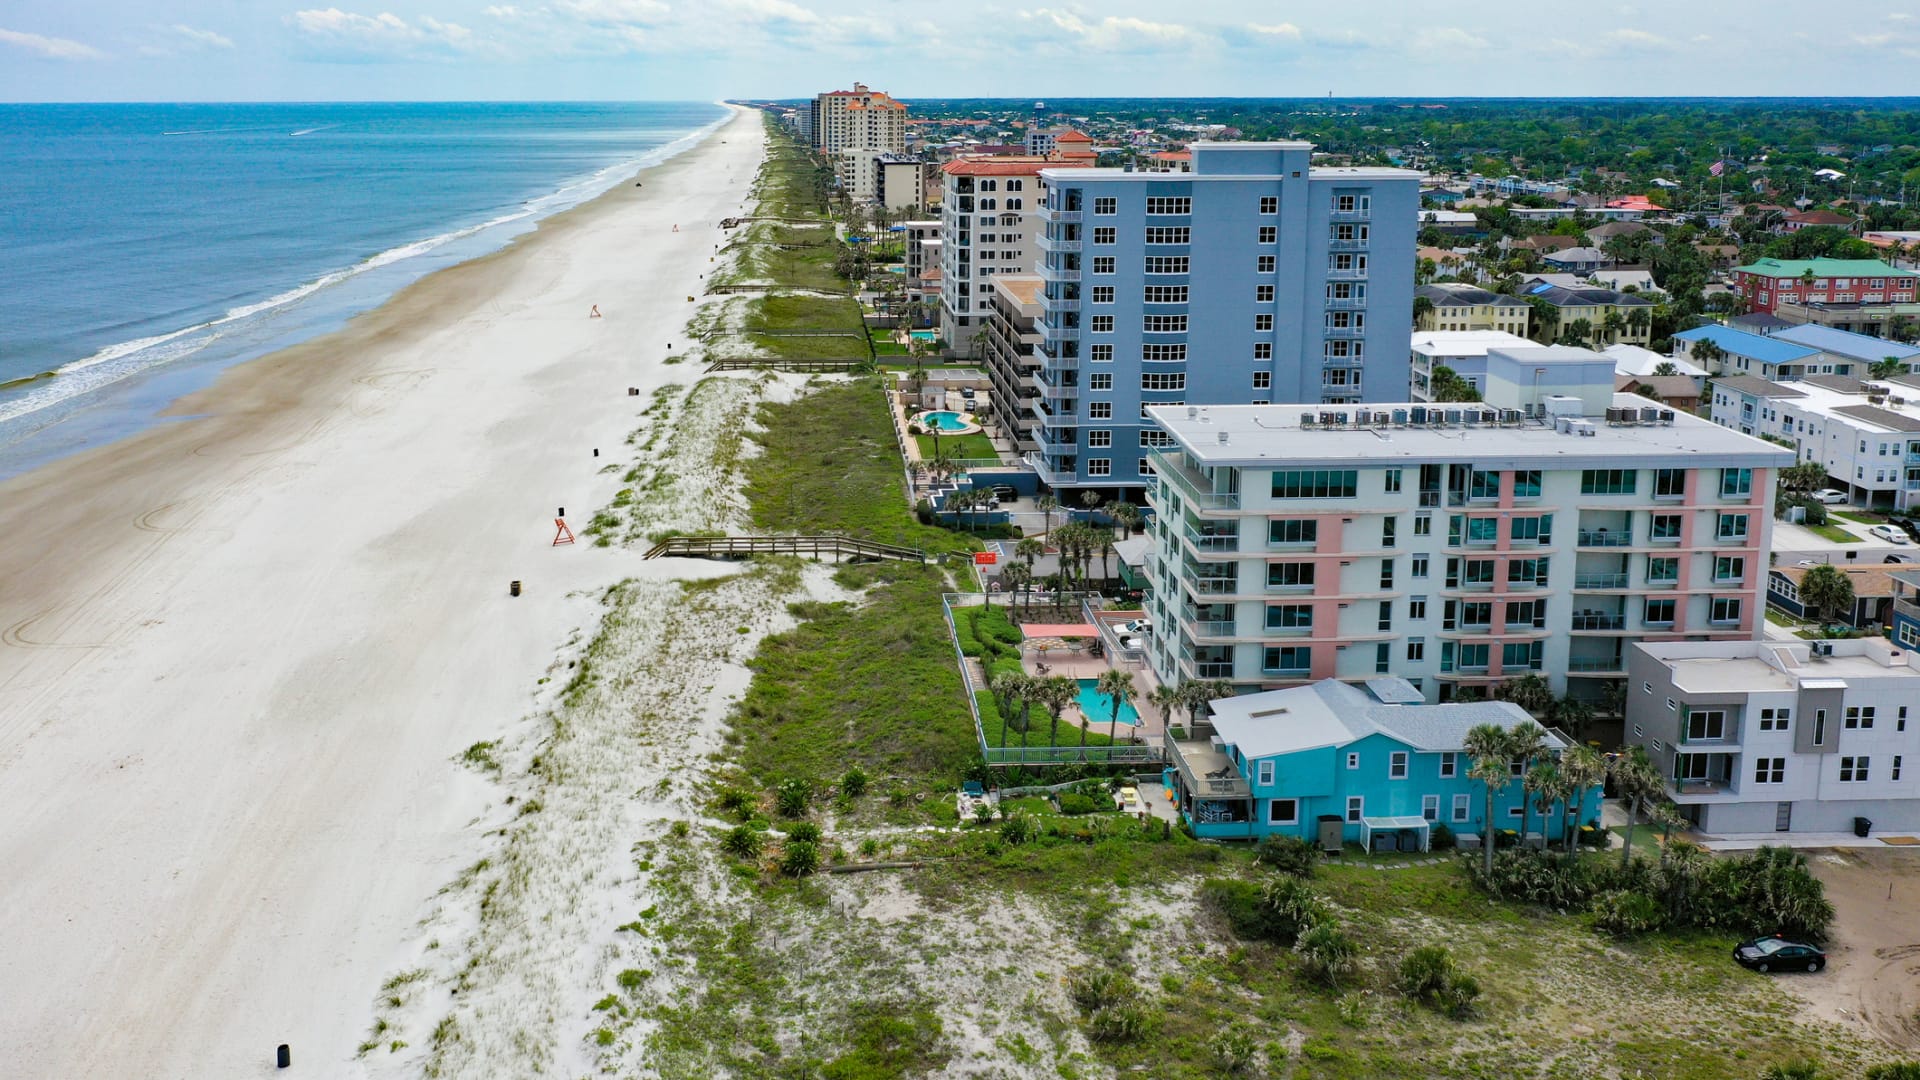 Jacksonville Beach, Florida is the top U.S. summer destination, according to HomeToGo.